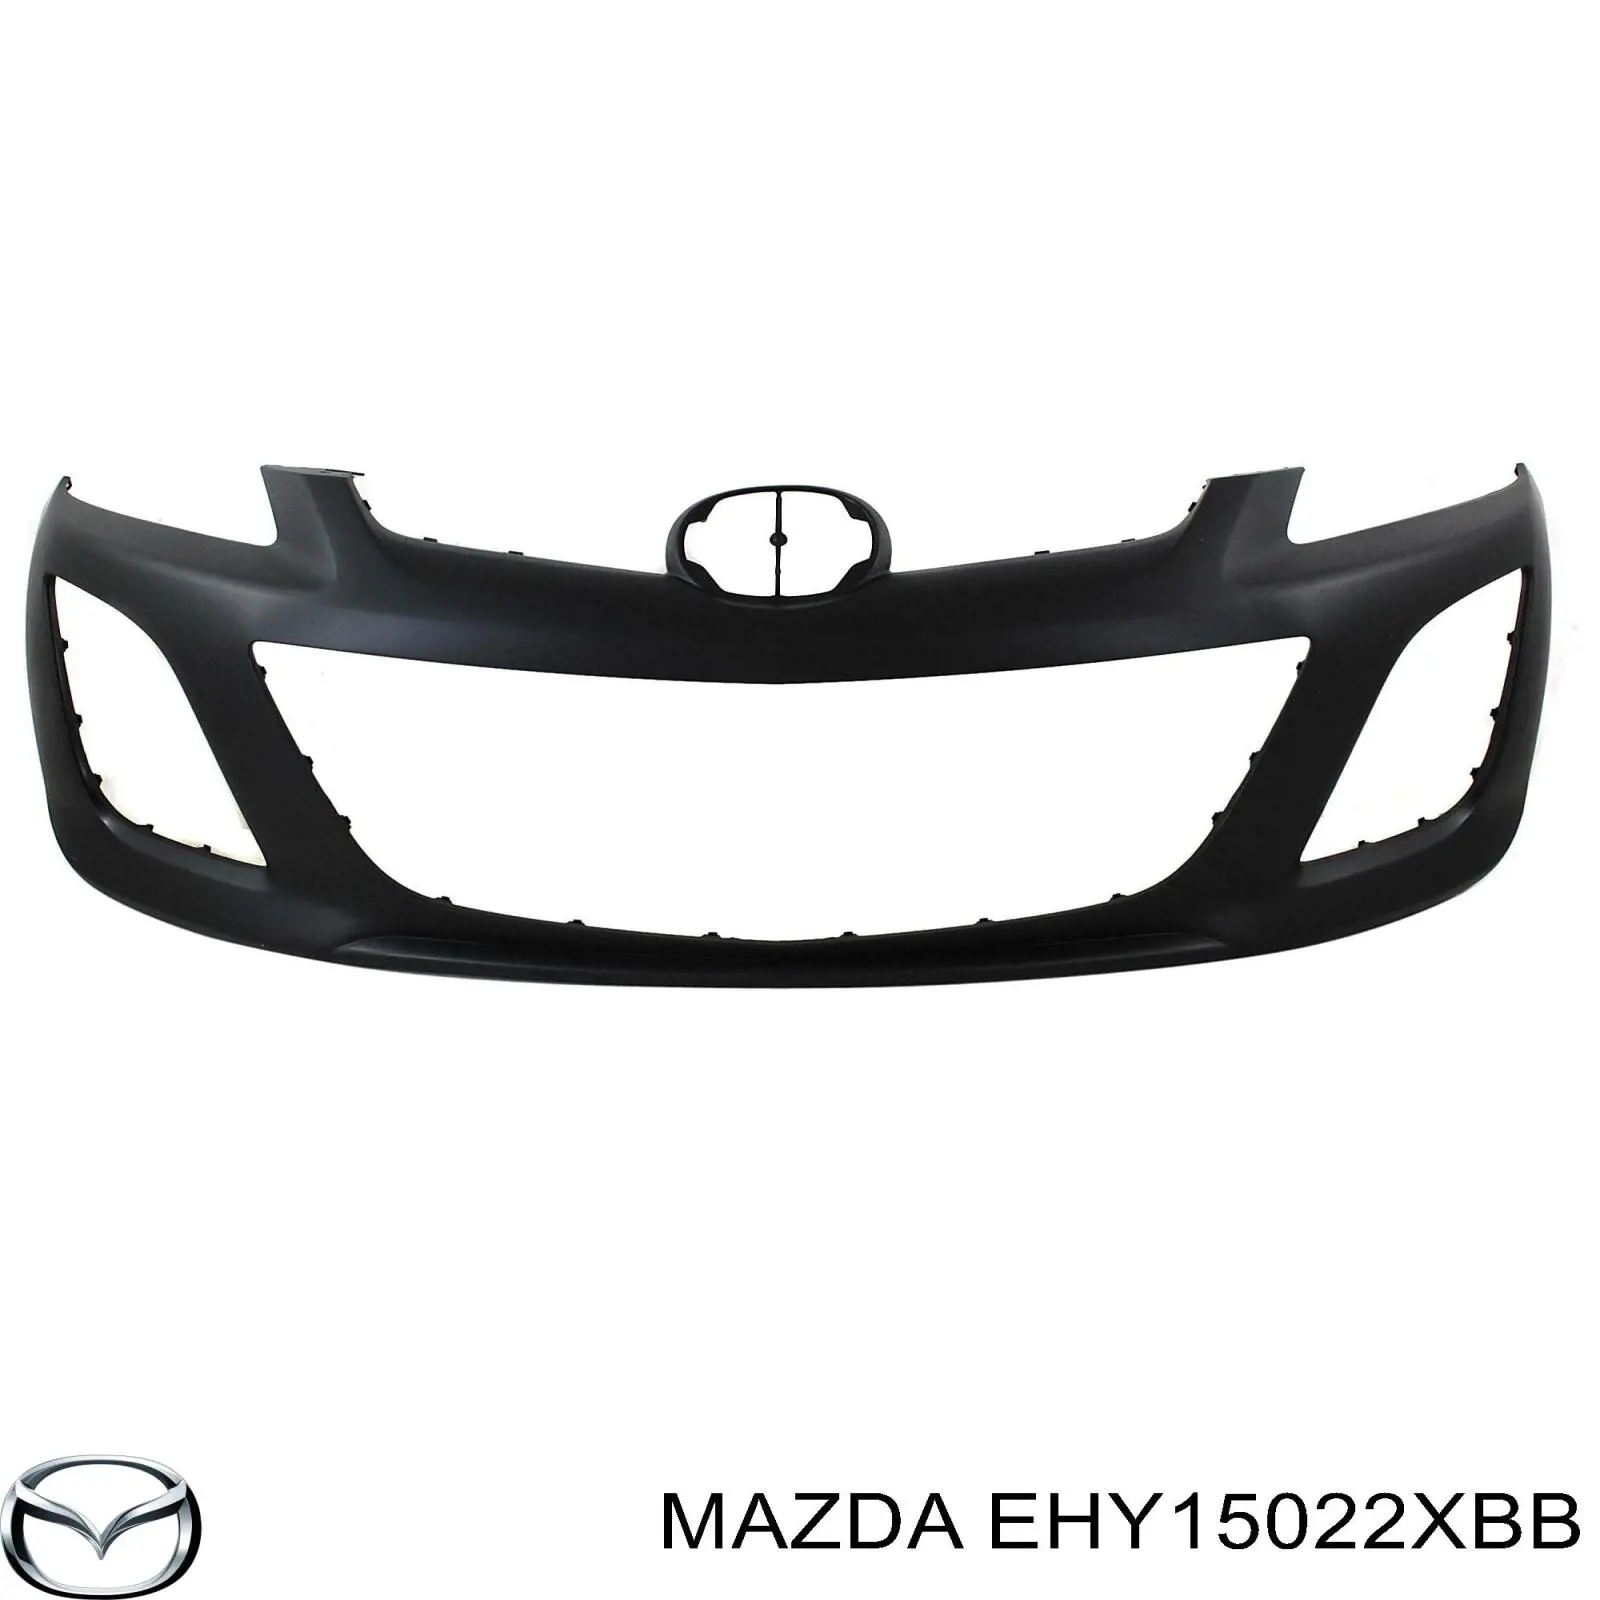 EHY15022XBB Mazda parachoques trasero